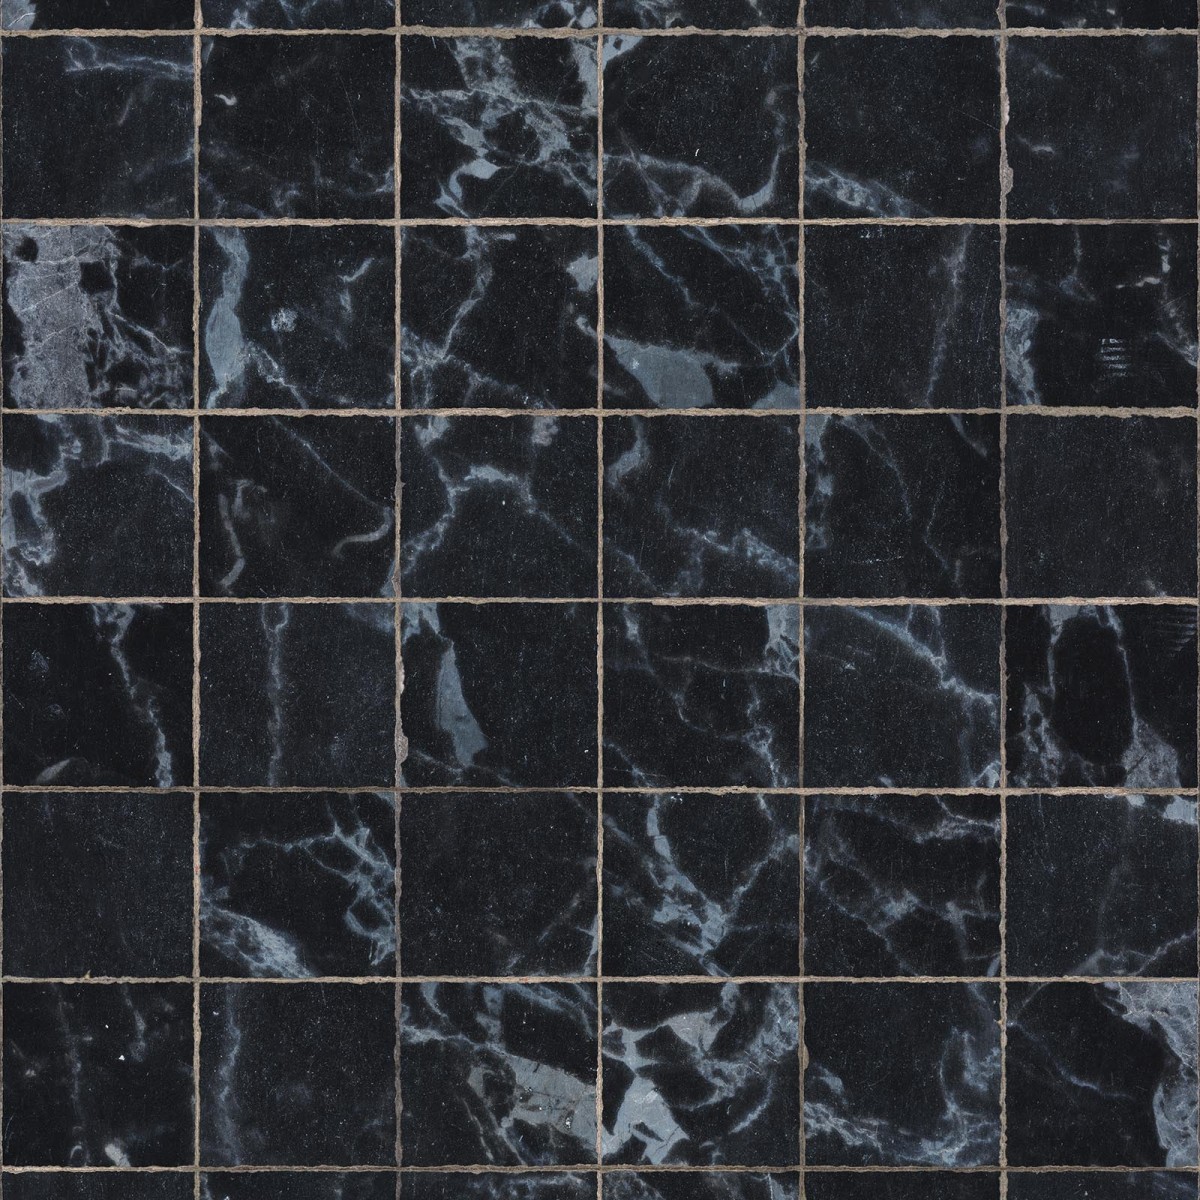 Tapet designer Materials Marble, Tiles 8.1x7.7cm, Black by Piet Hein Eek, NLXL, 4.9mp / rola, Tapet Exclusivist 